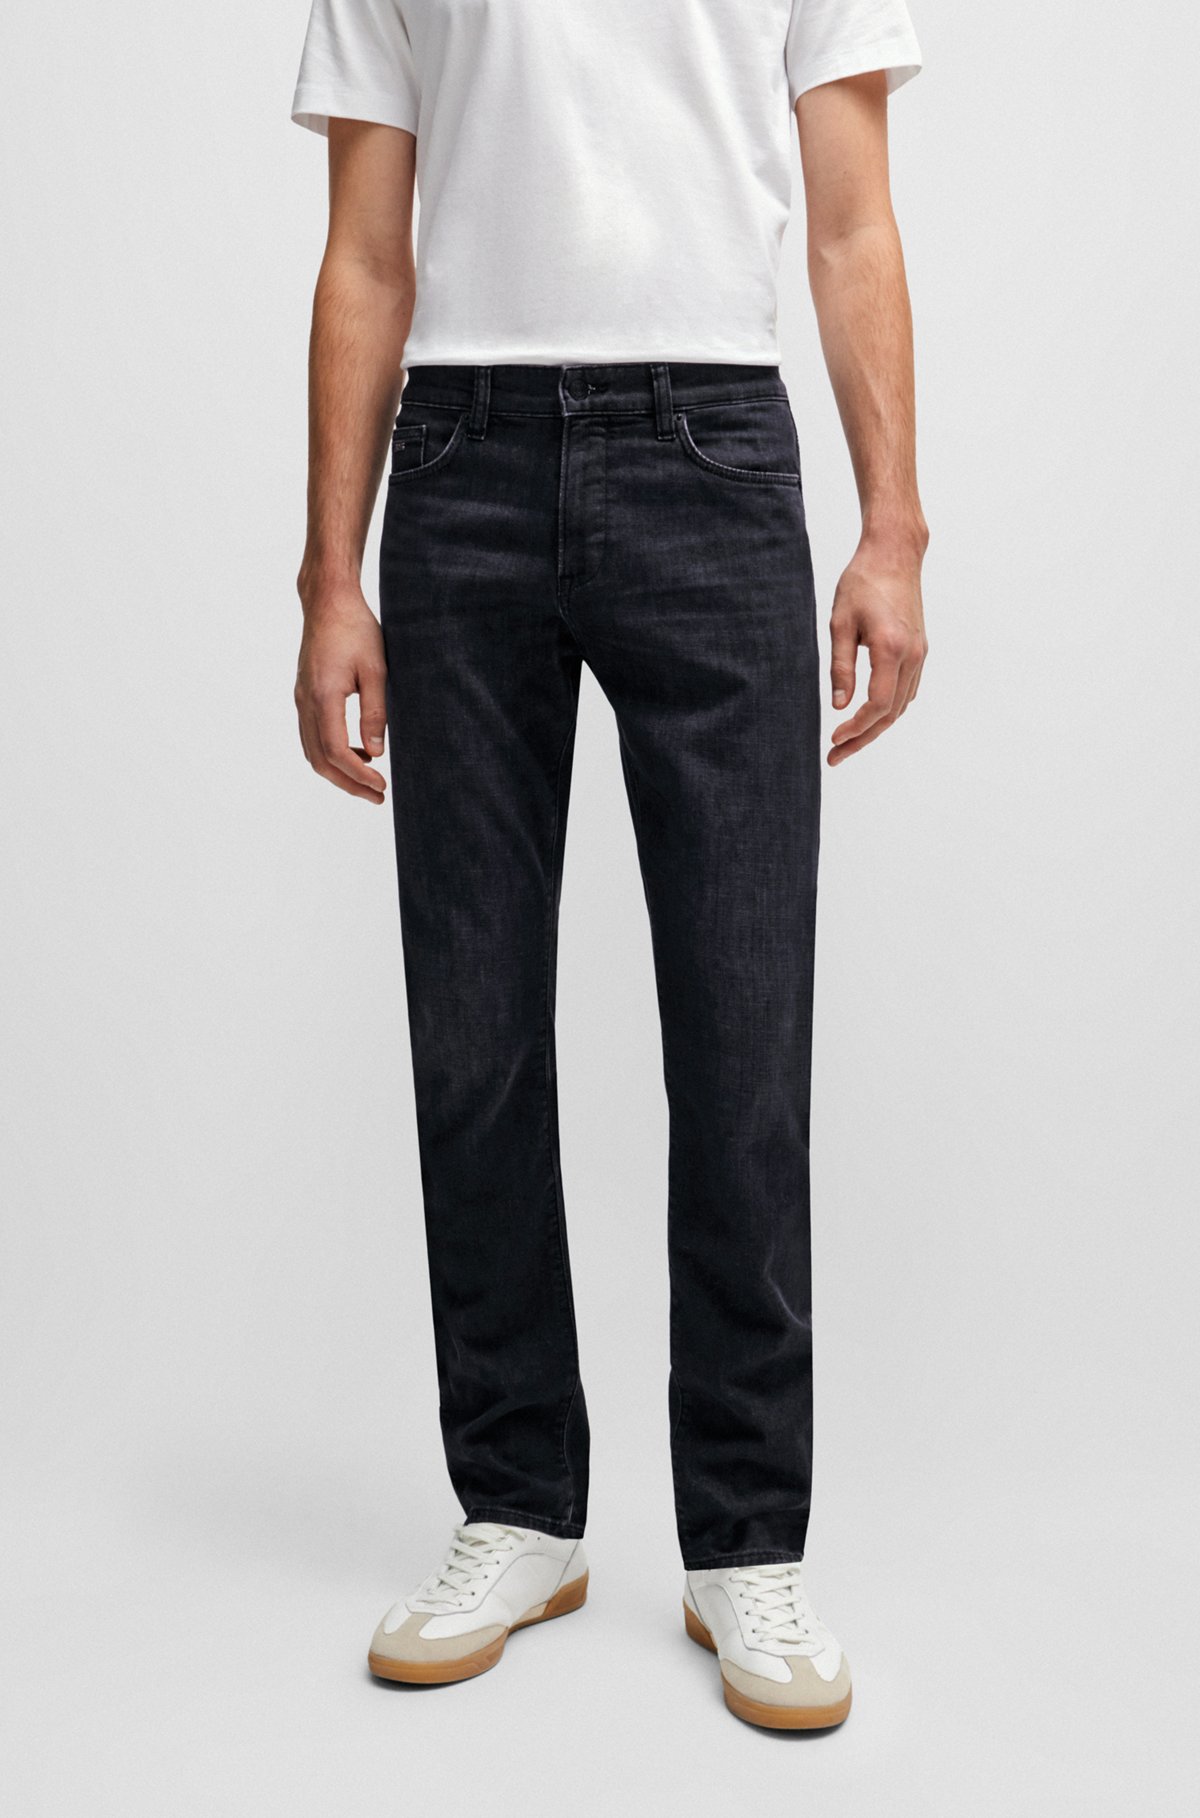 BOSS - Slim-fit jeans in Italian super-soft black denim